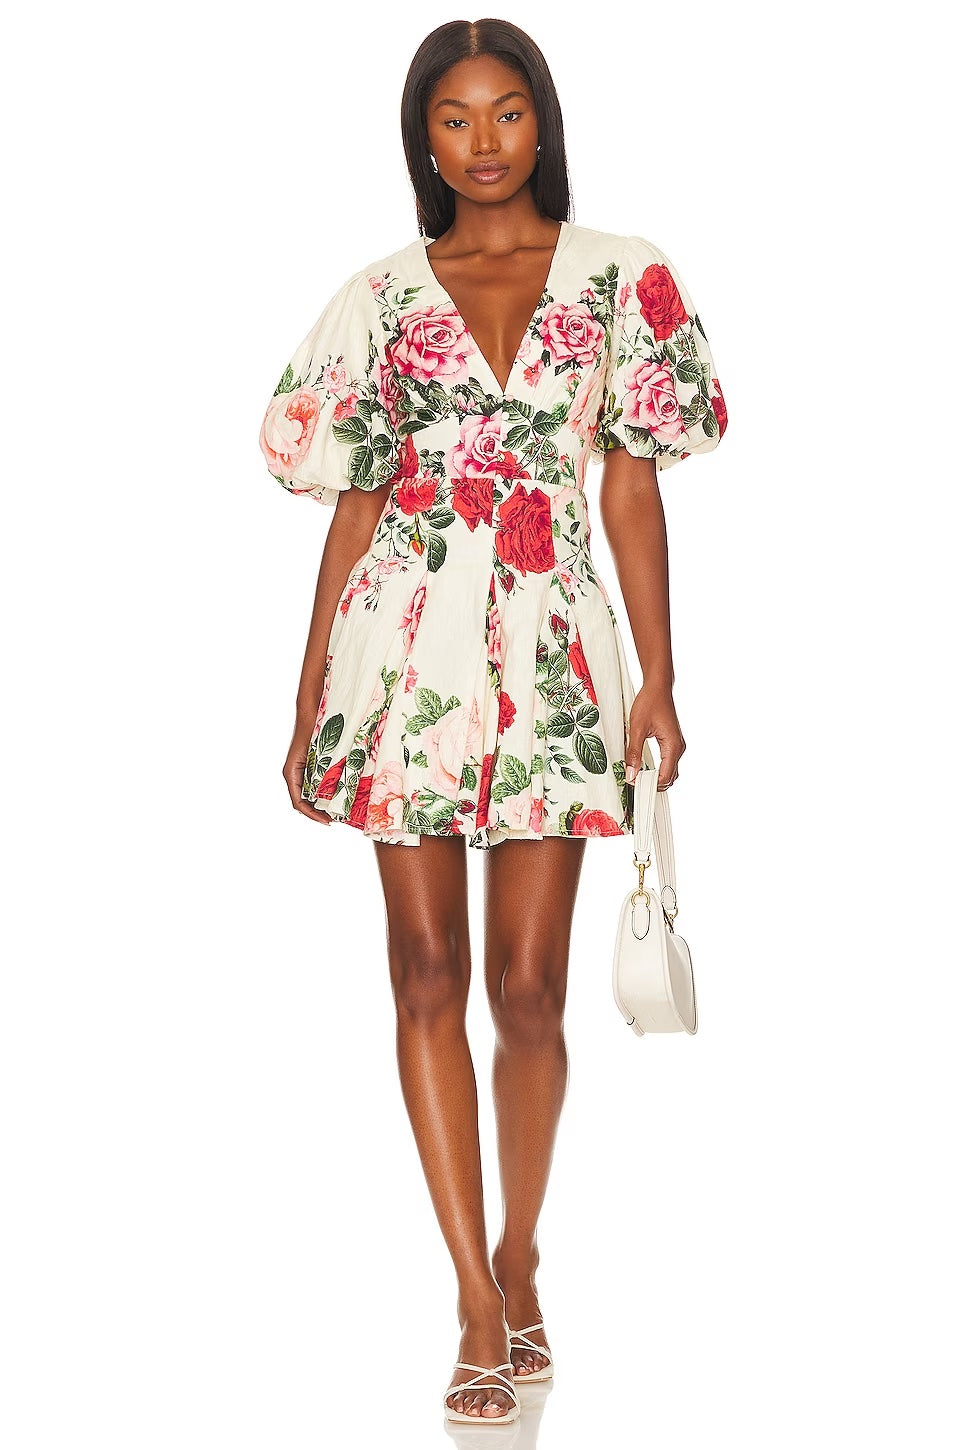 Hemant & Nandita Rose Print Short Dress, floral dress, mini dress, puffed sleeved dress, women's clothing